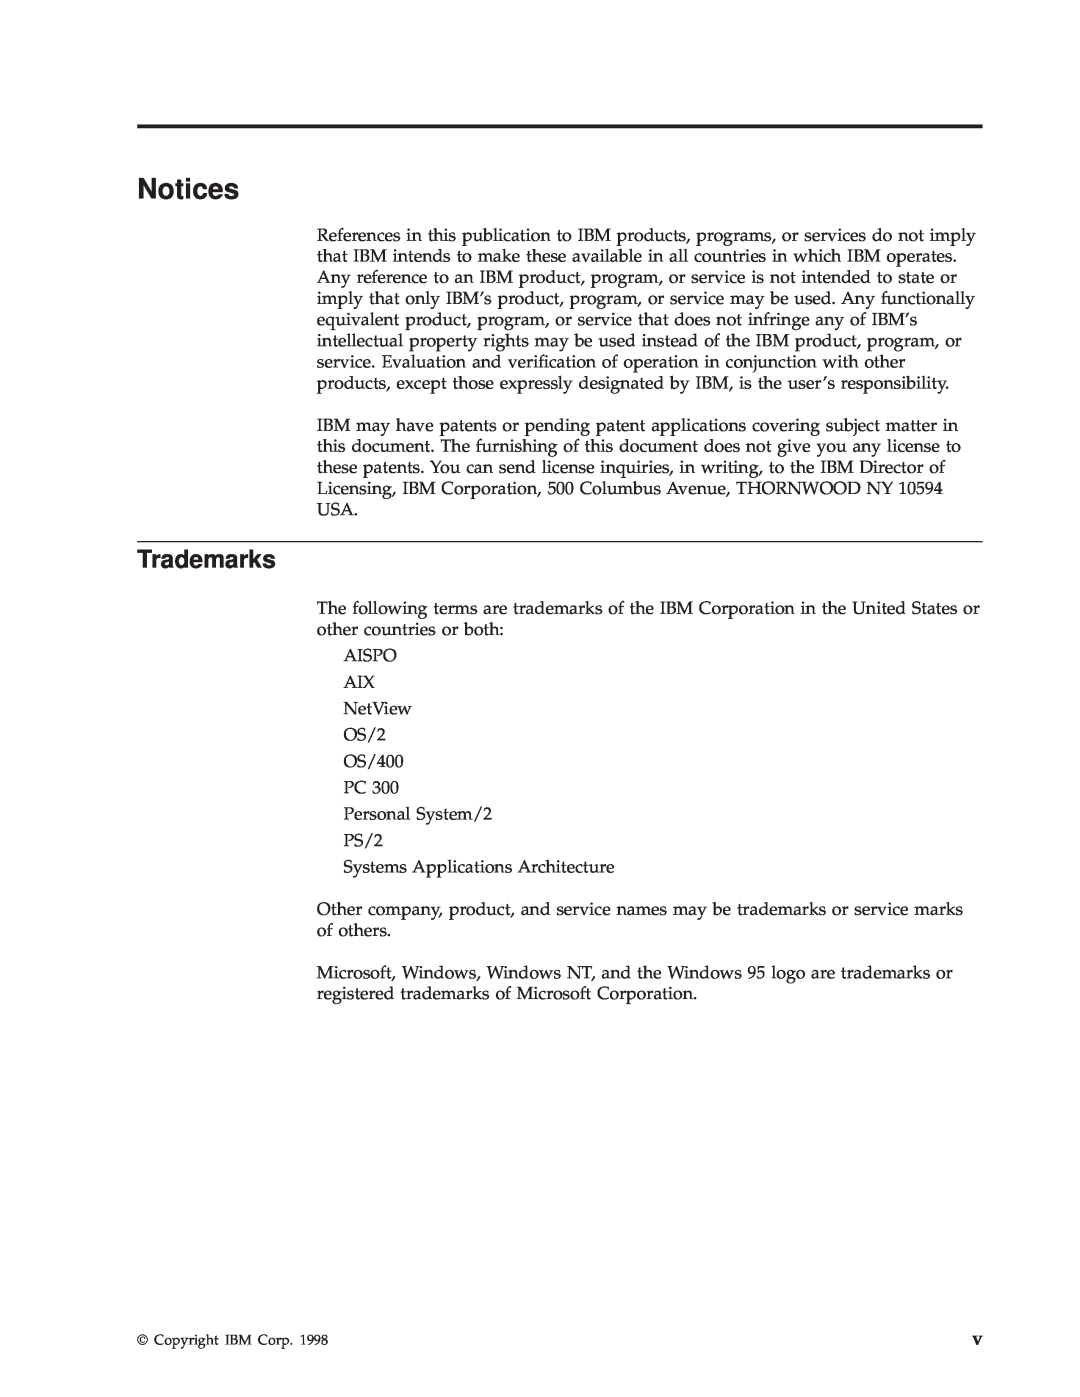 IBM 4690 manual Notices, Trademarks 